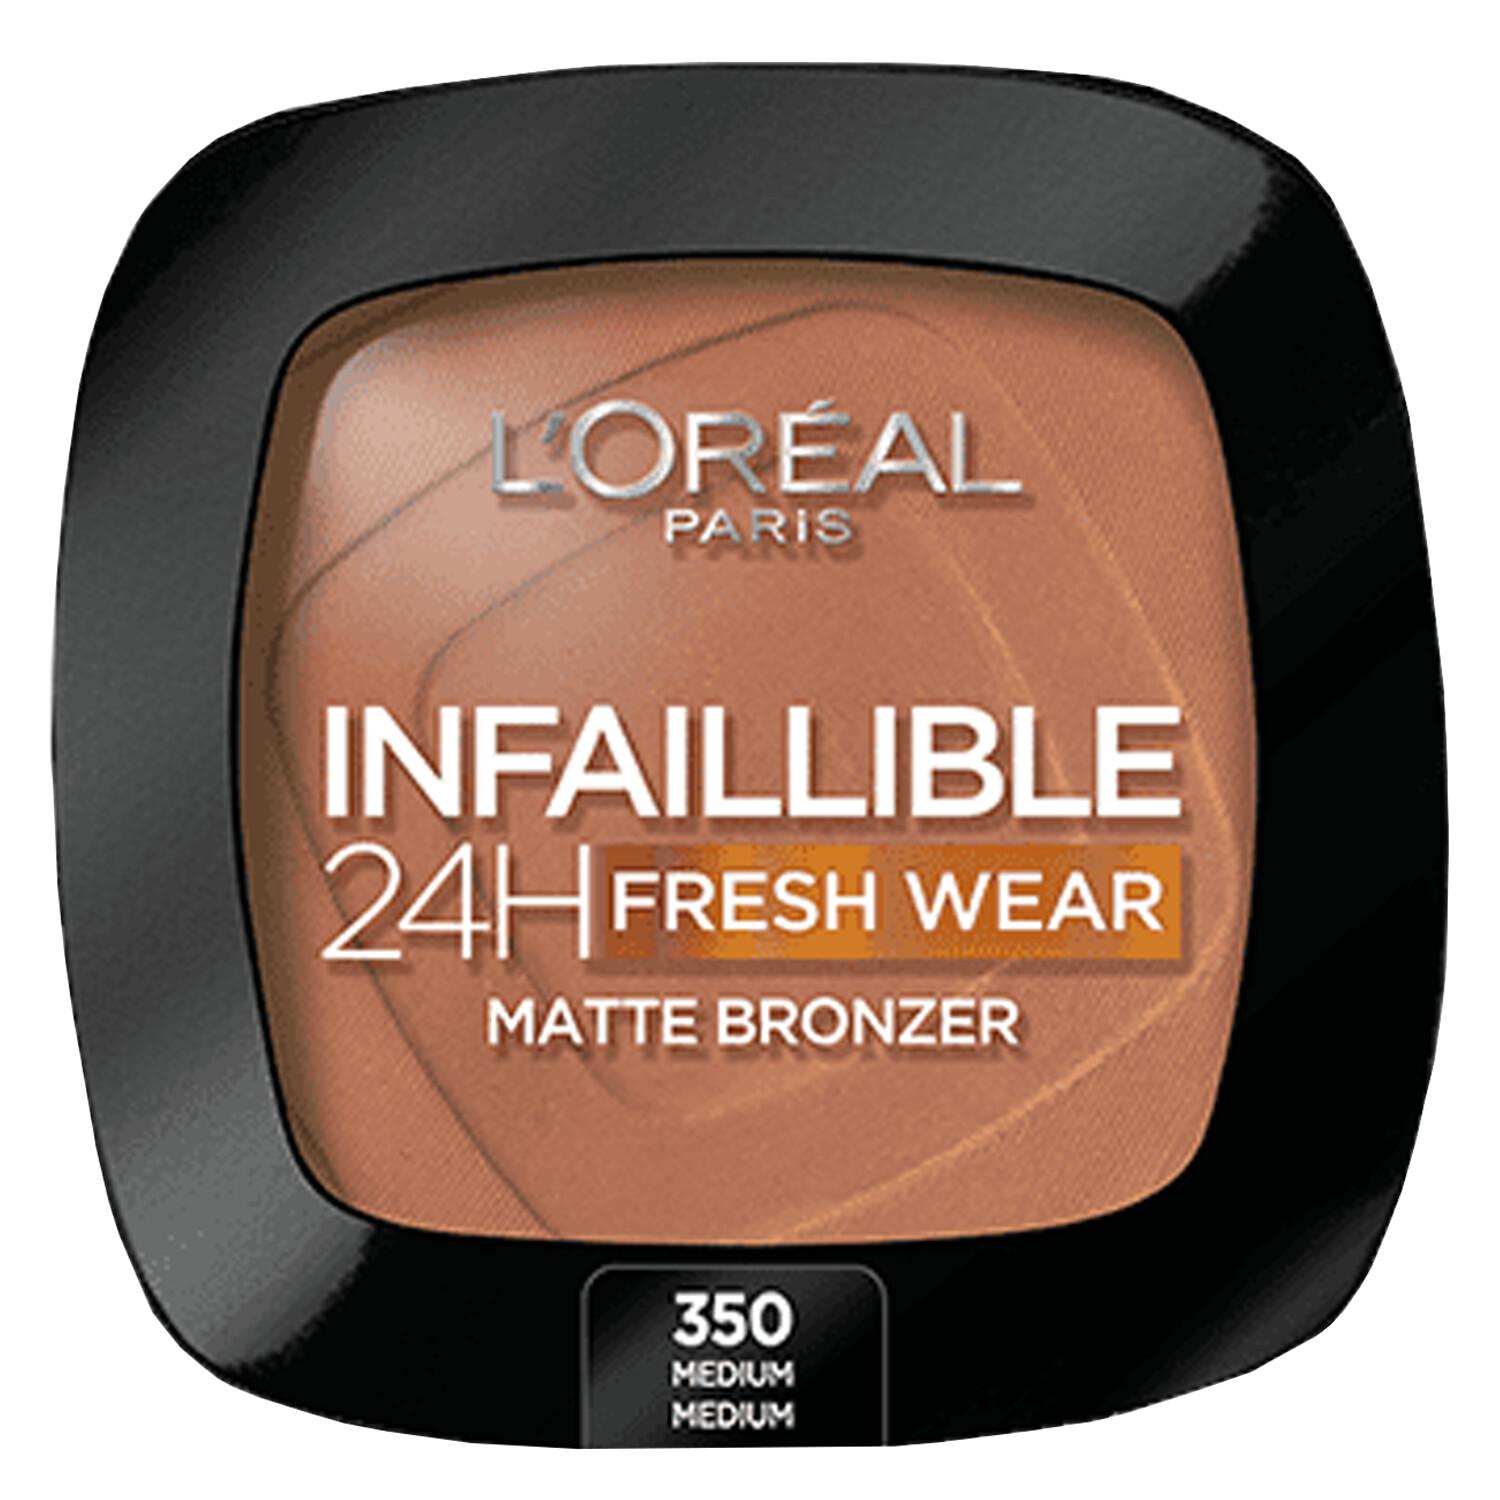 LOréal Infaillible - 24H Fresh Wear Matte Bronzer 350 Medium